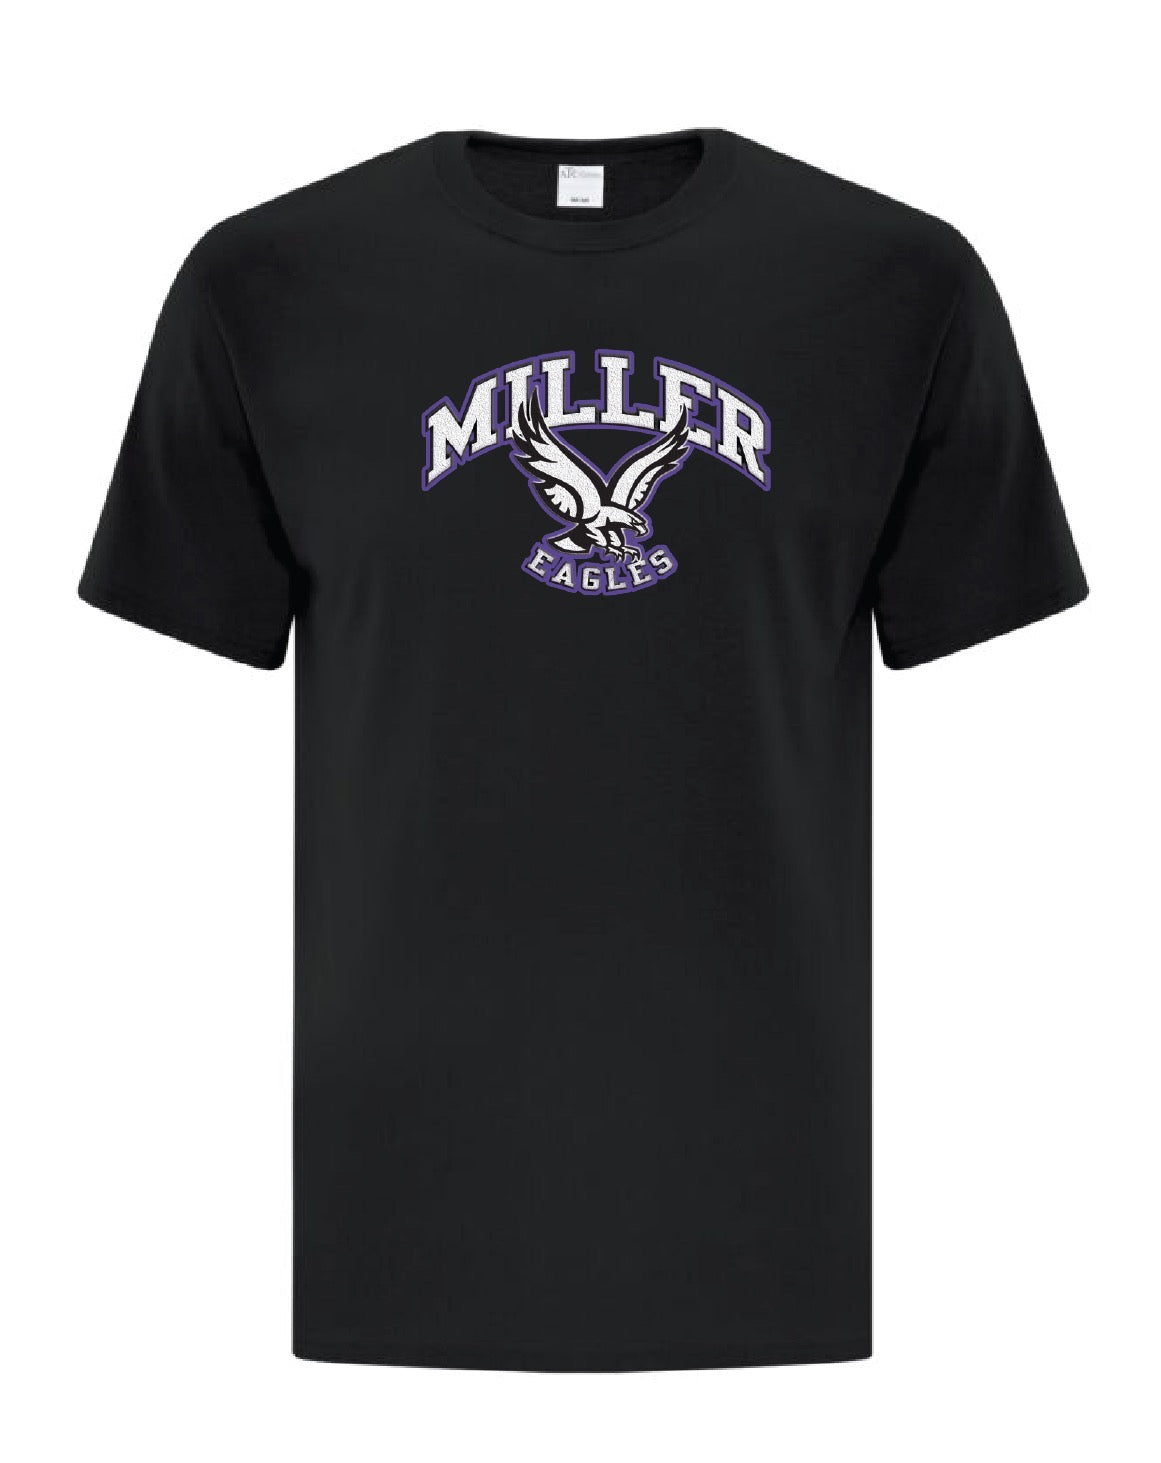 Youth "Miller Spirit Wear" T-shirt